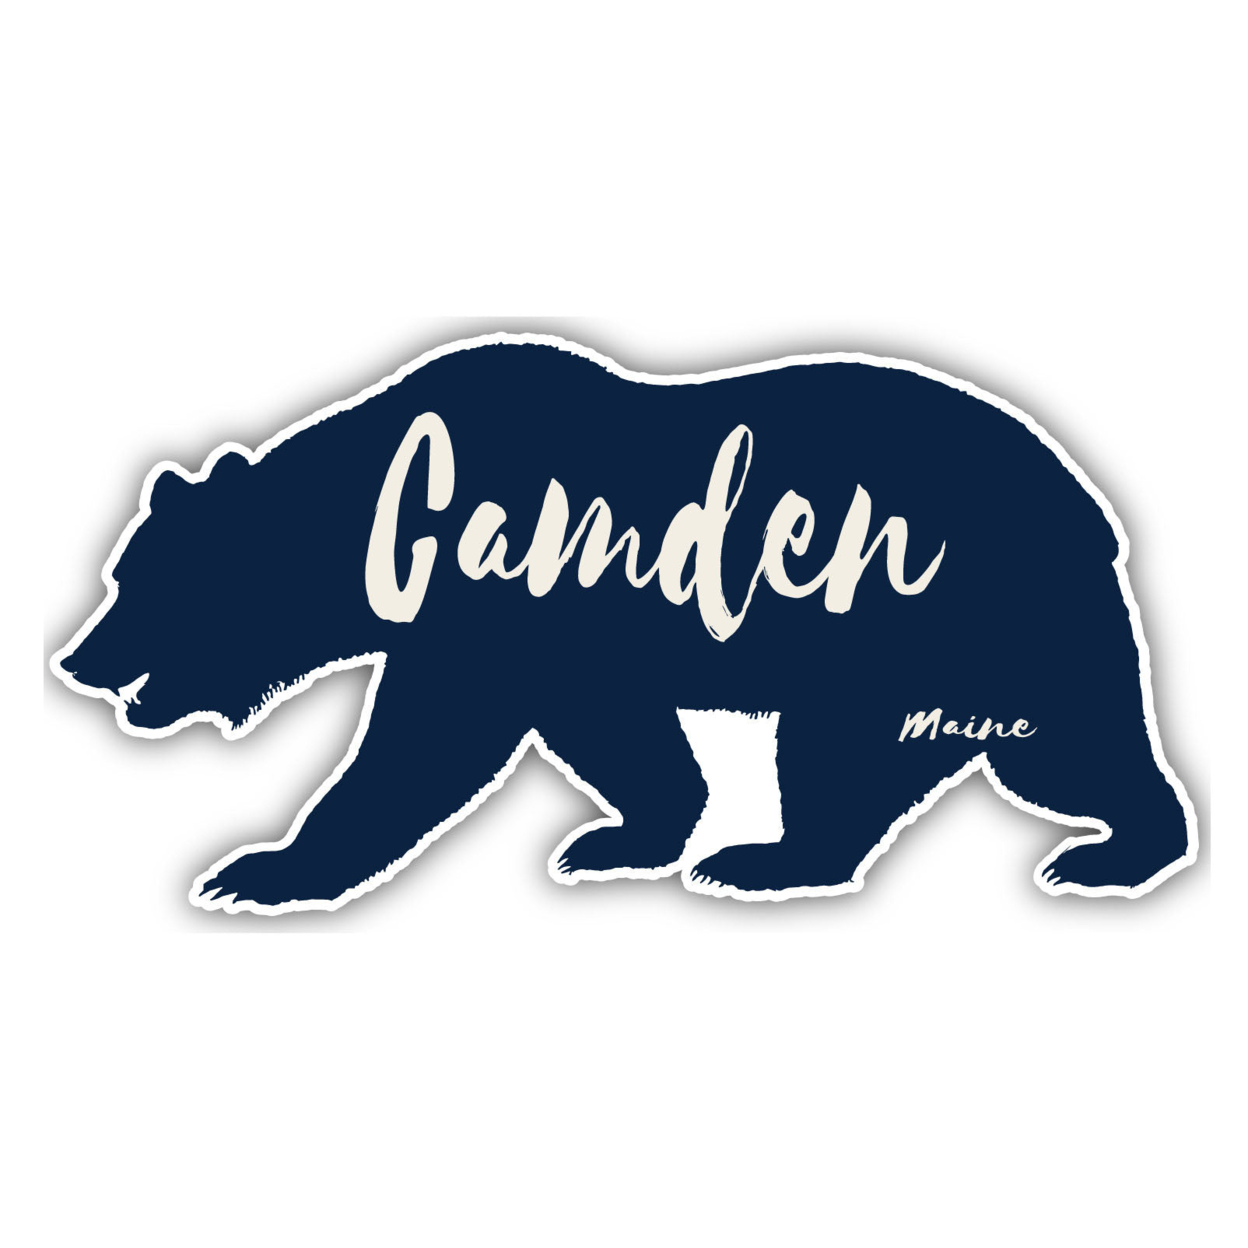 Camden Maine Souvenir Decorative Stickers (Choose Theme And Size) - Single Unit, 6-Inch, Tent